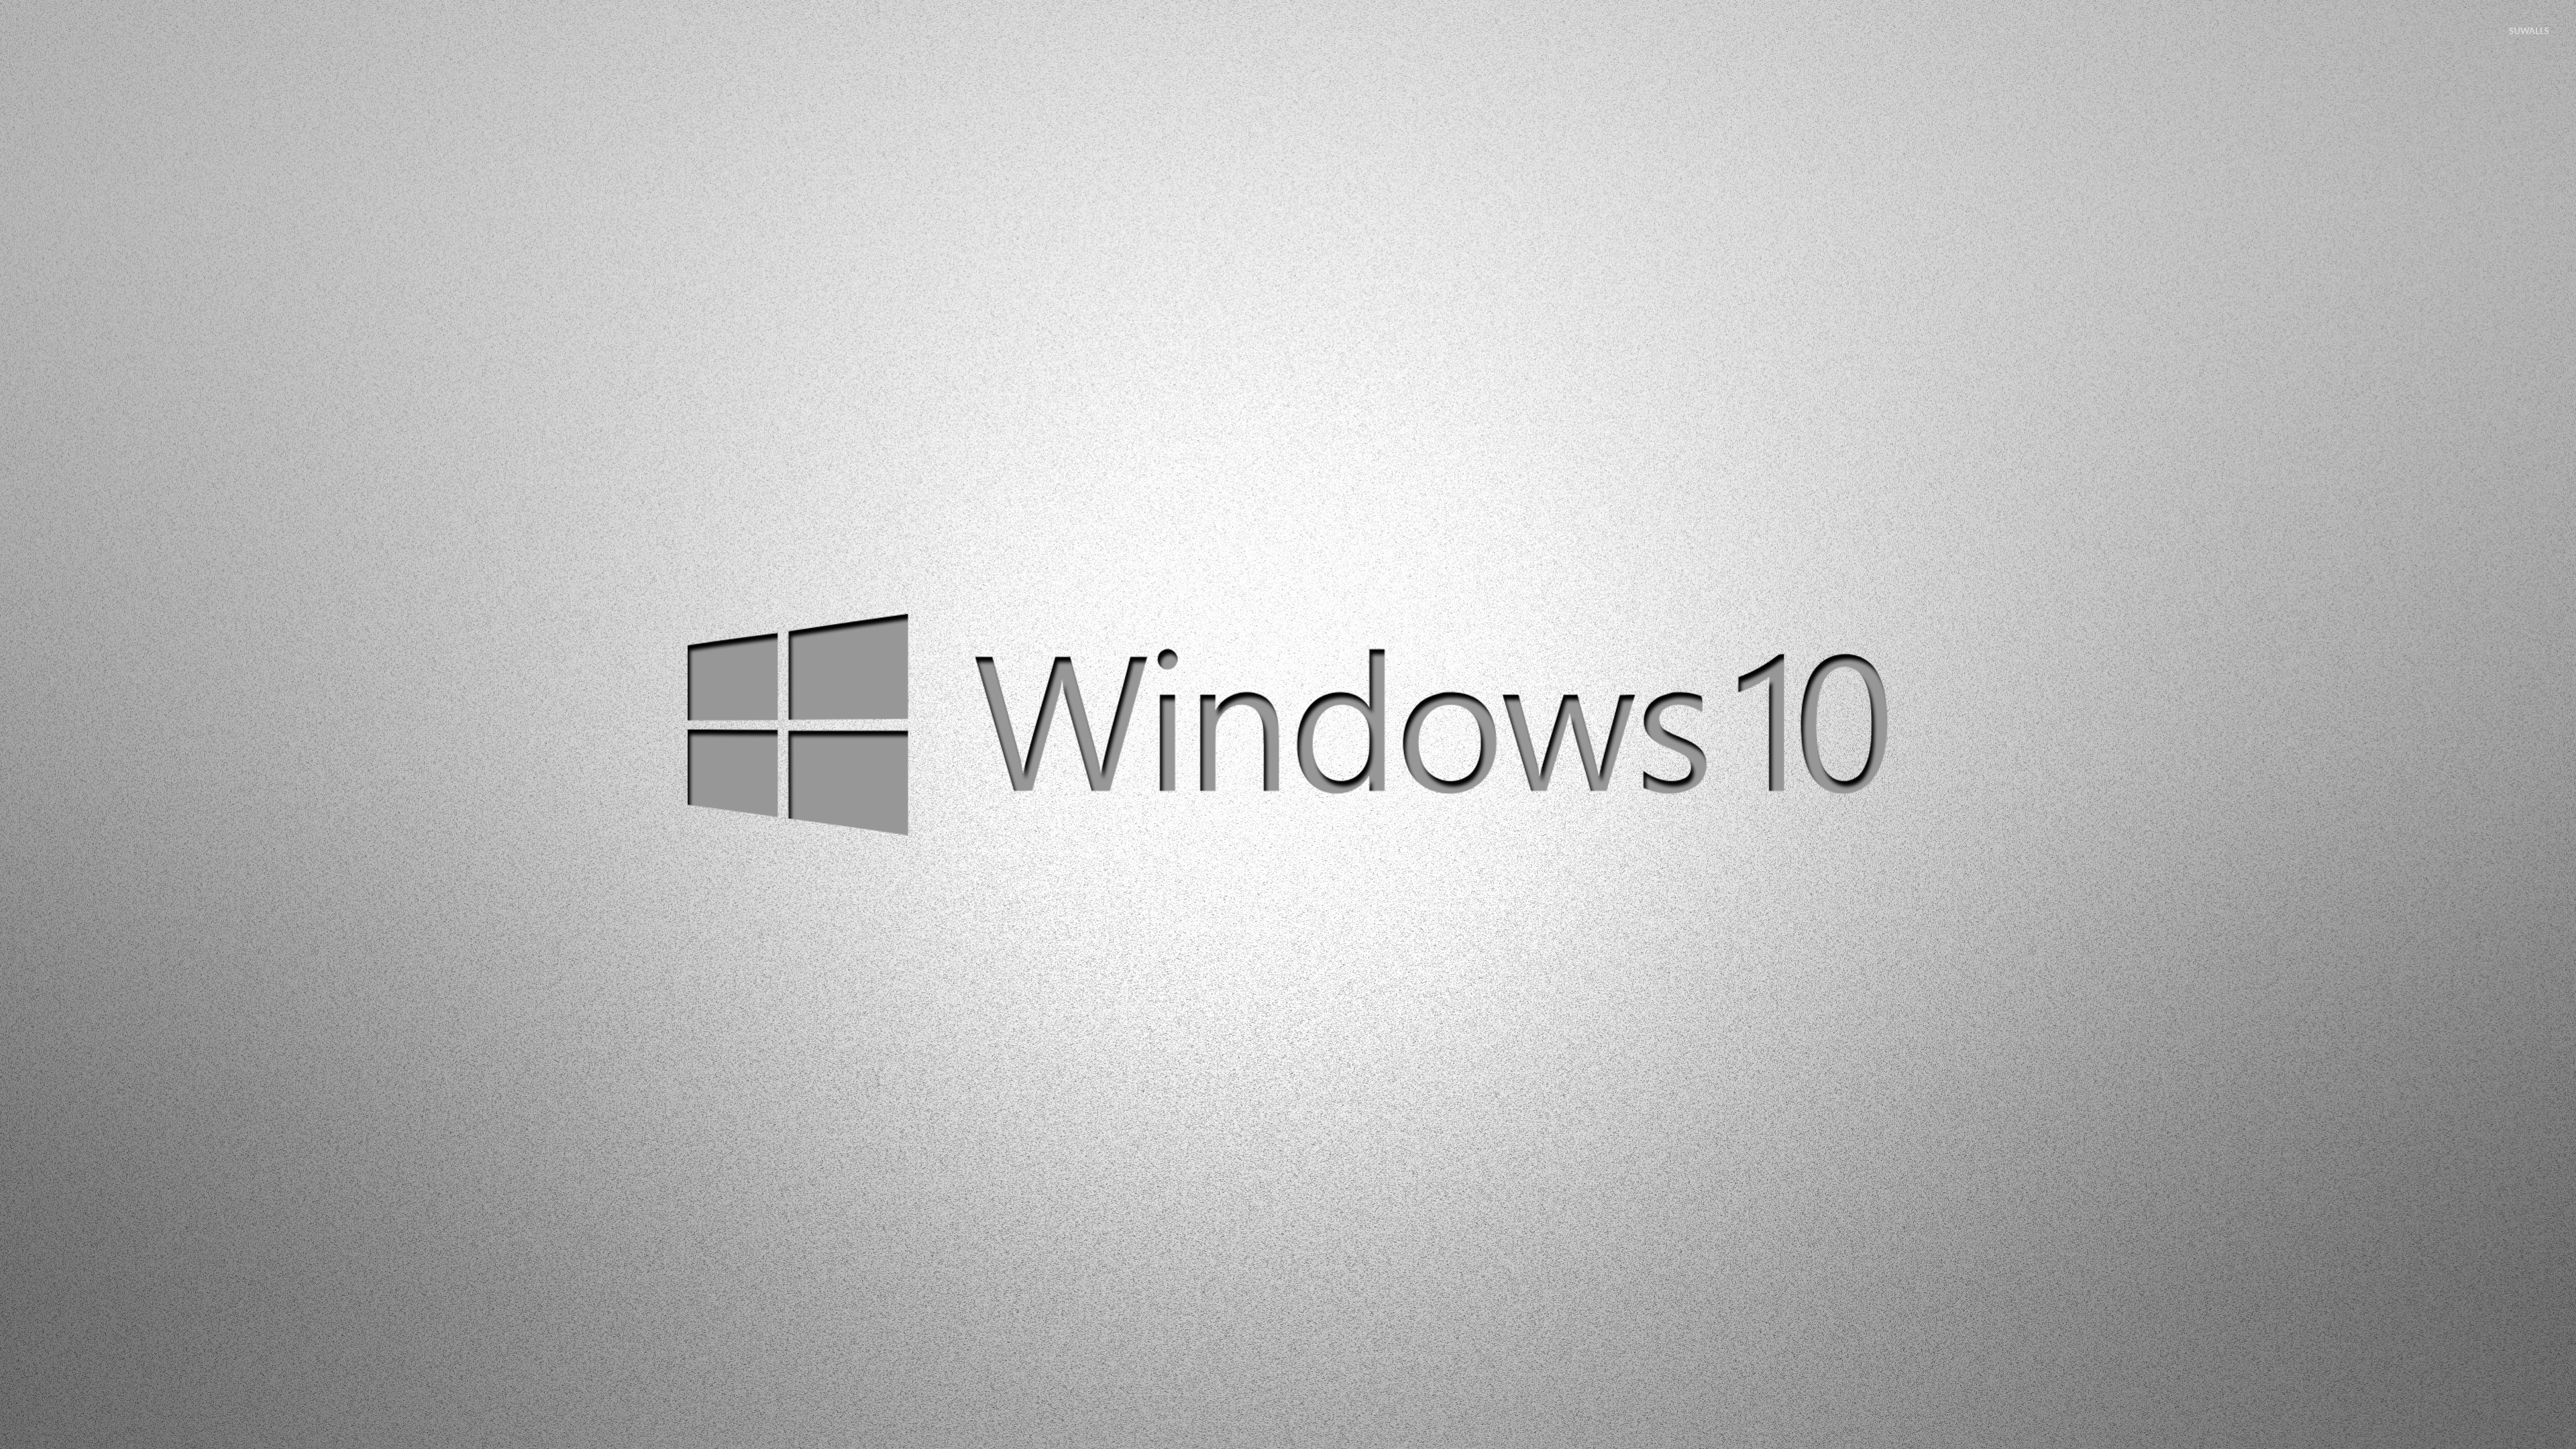 Microsoft Windows 10 Logo Wallpaper